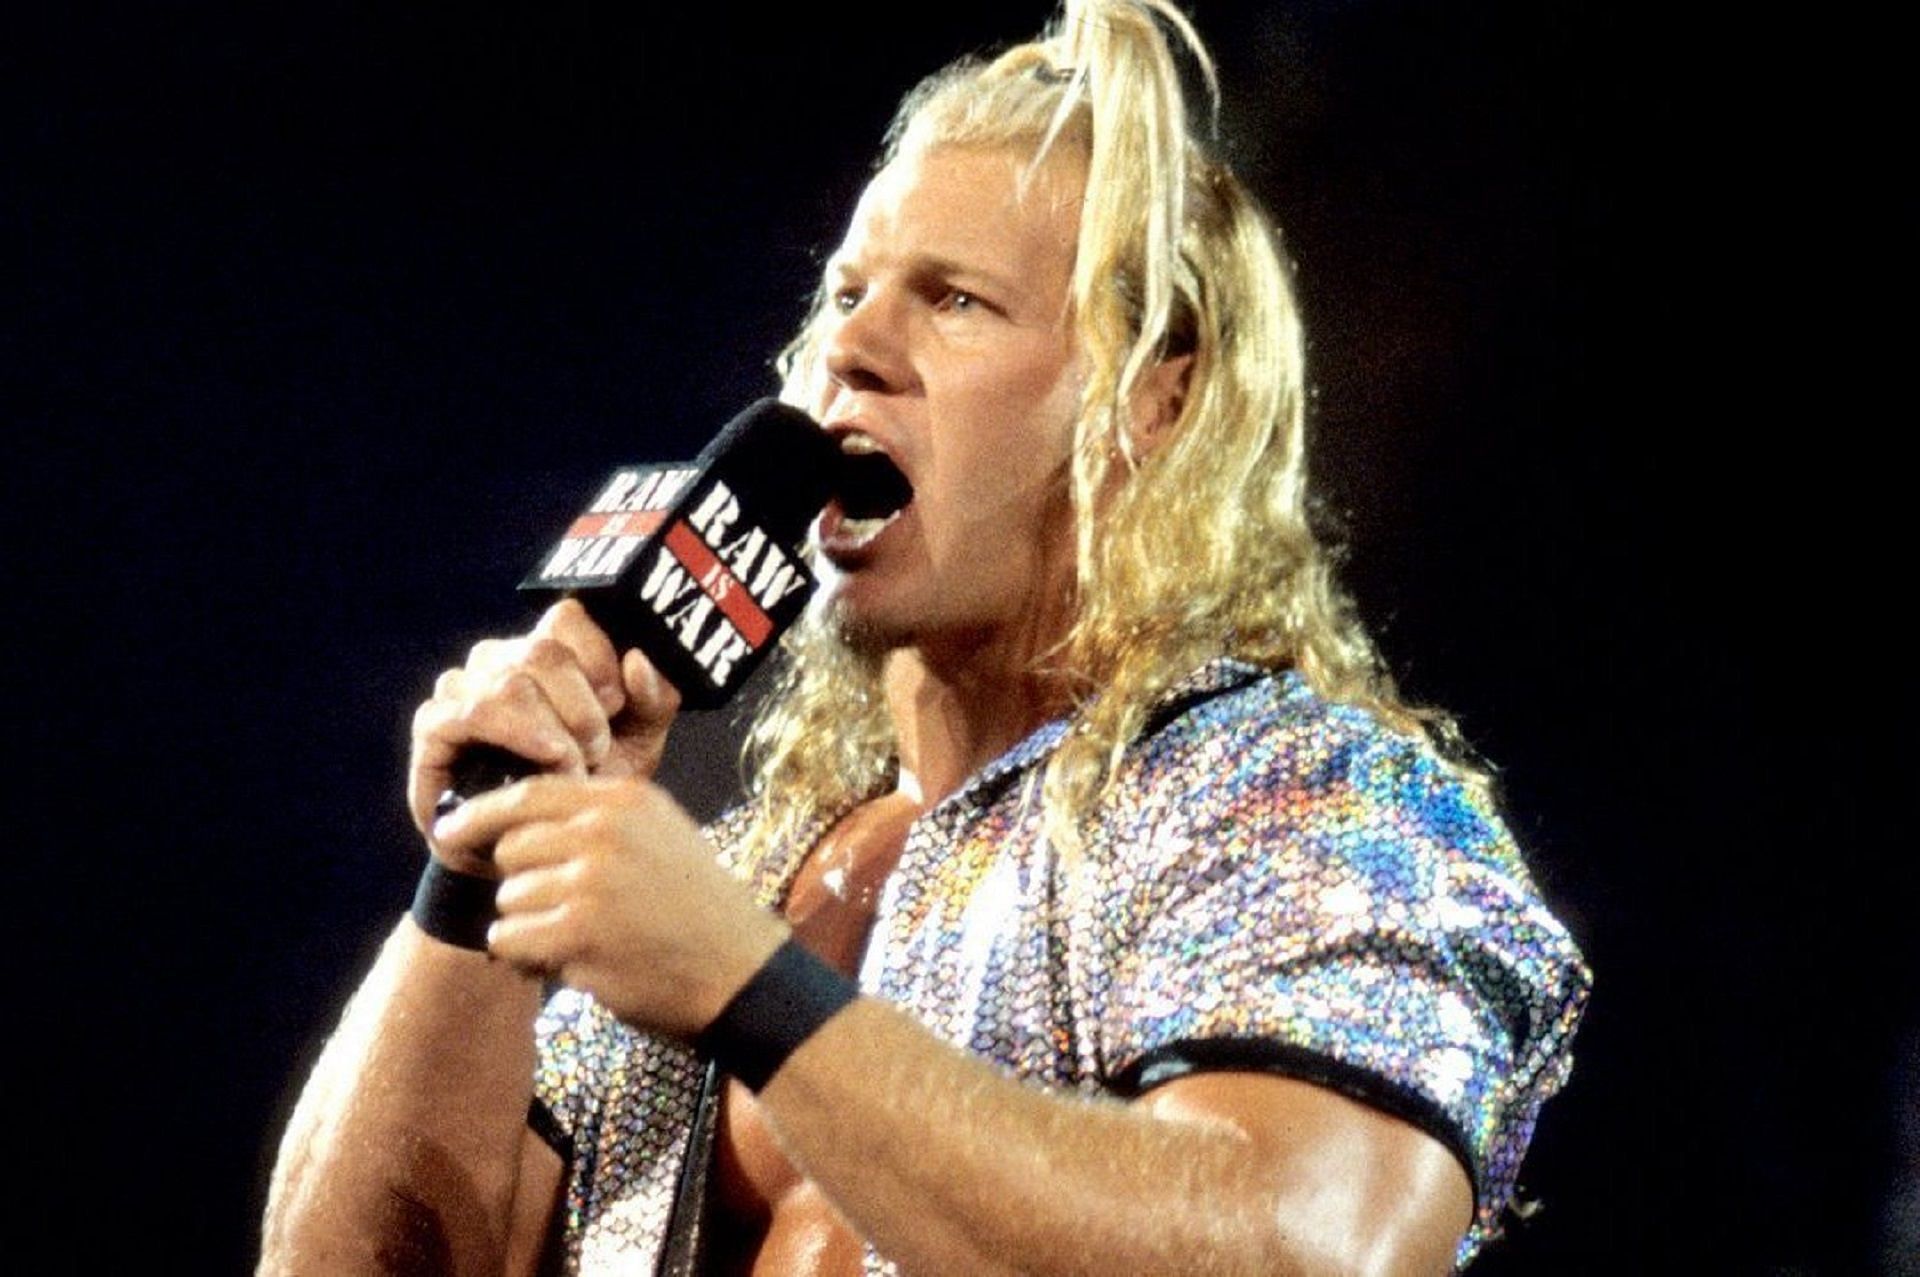 RAW is Jericho! Chris Jericho debuts on RAW